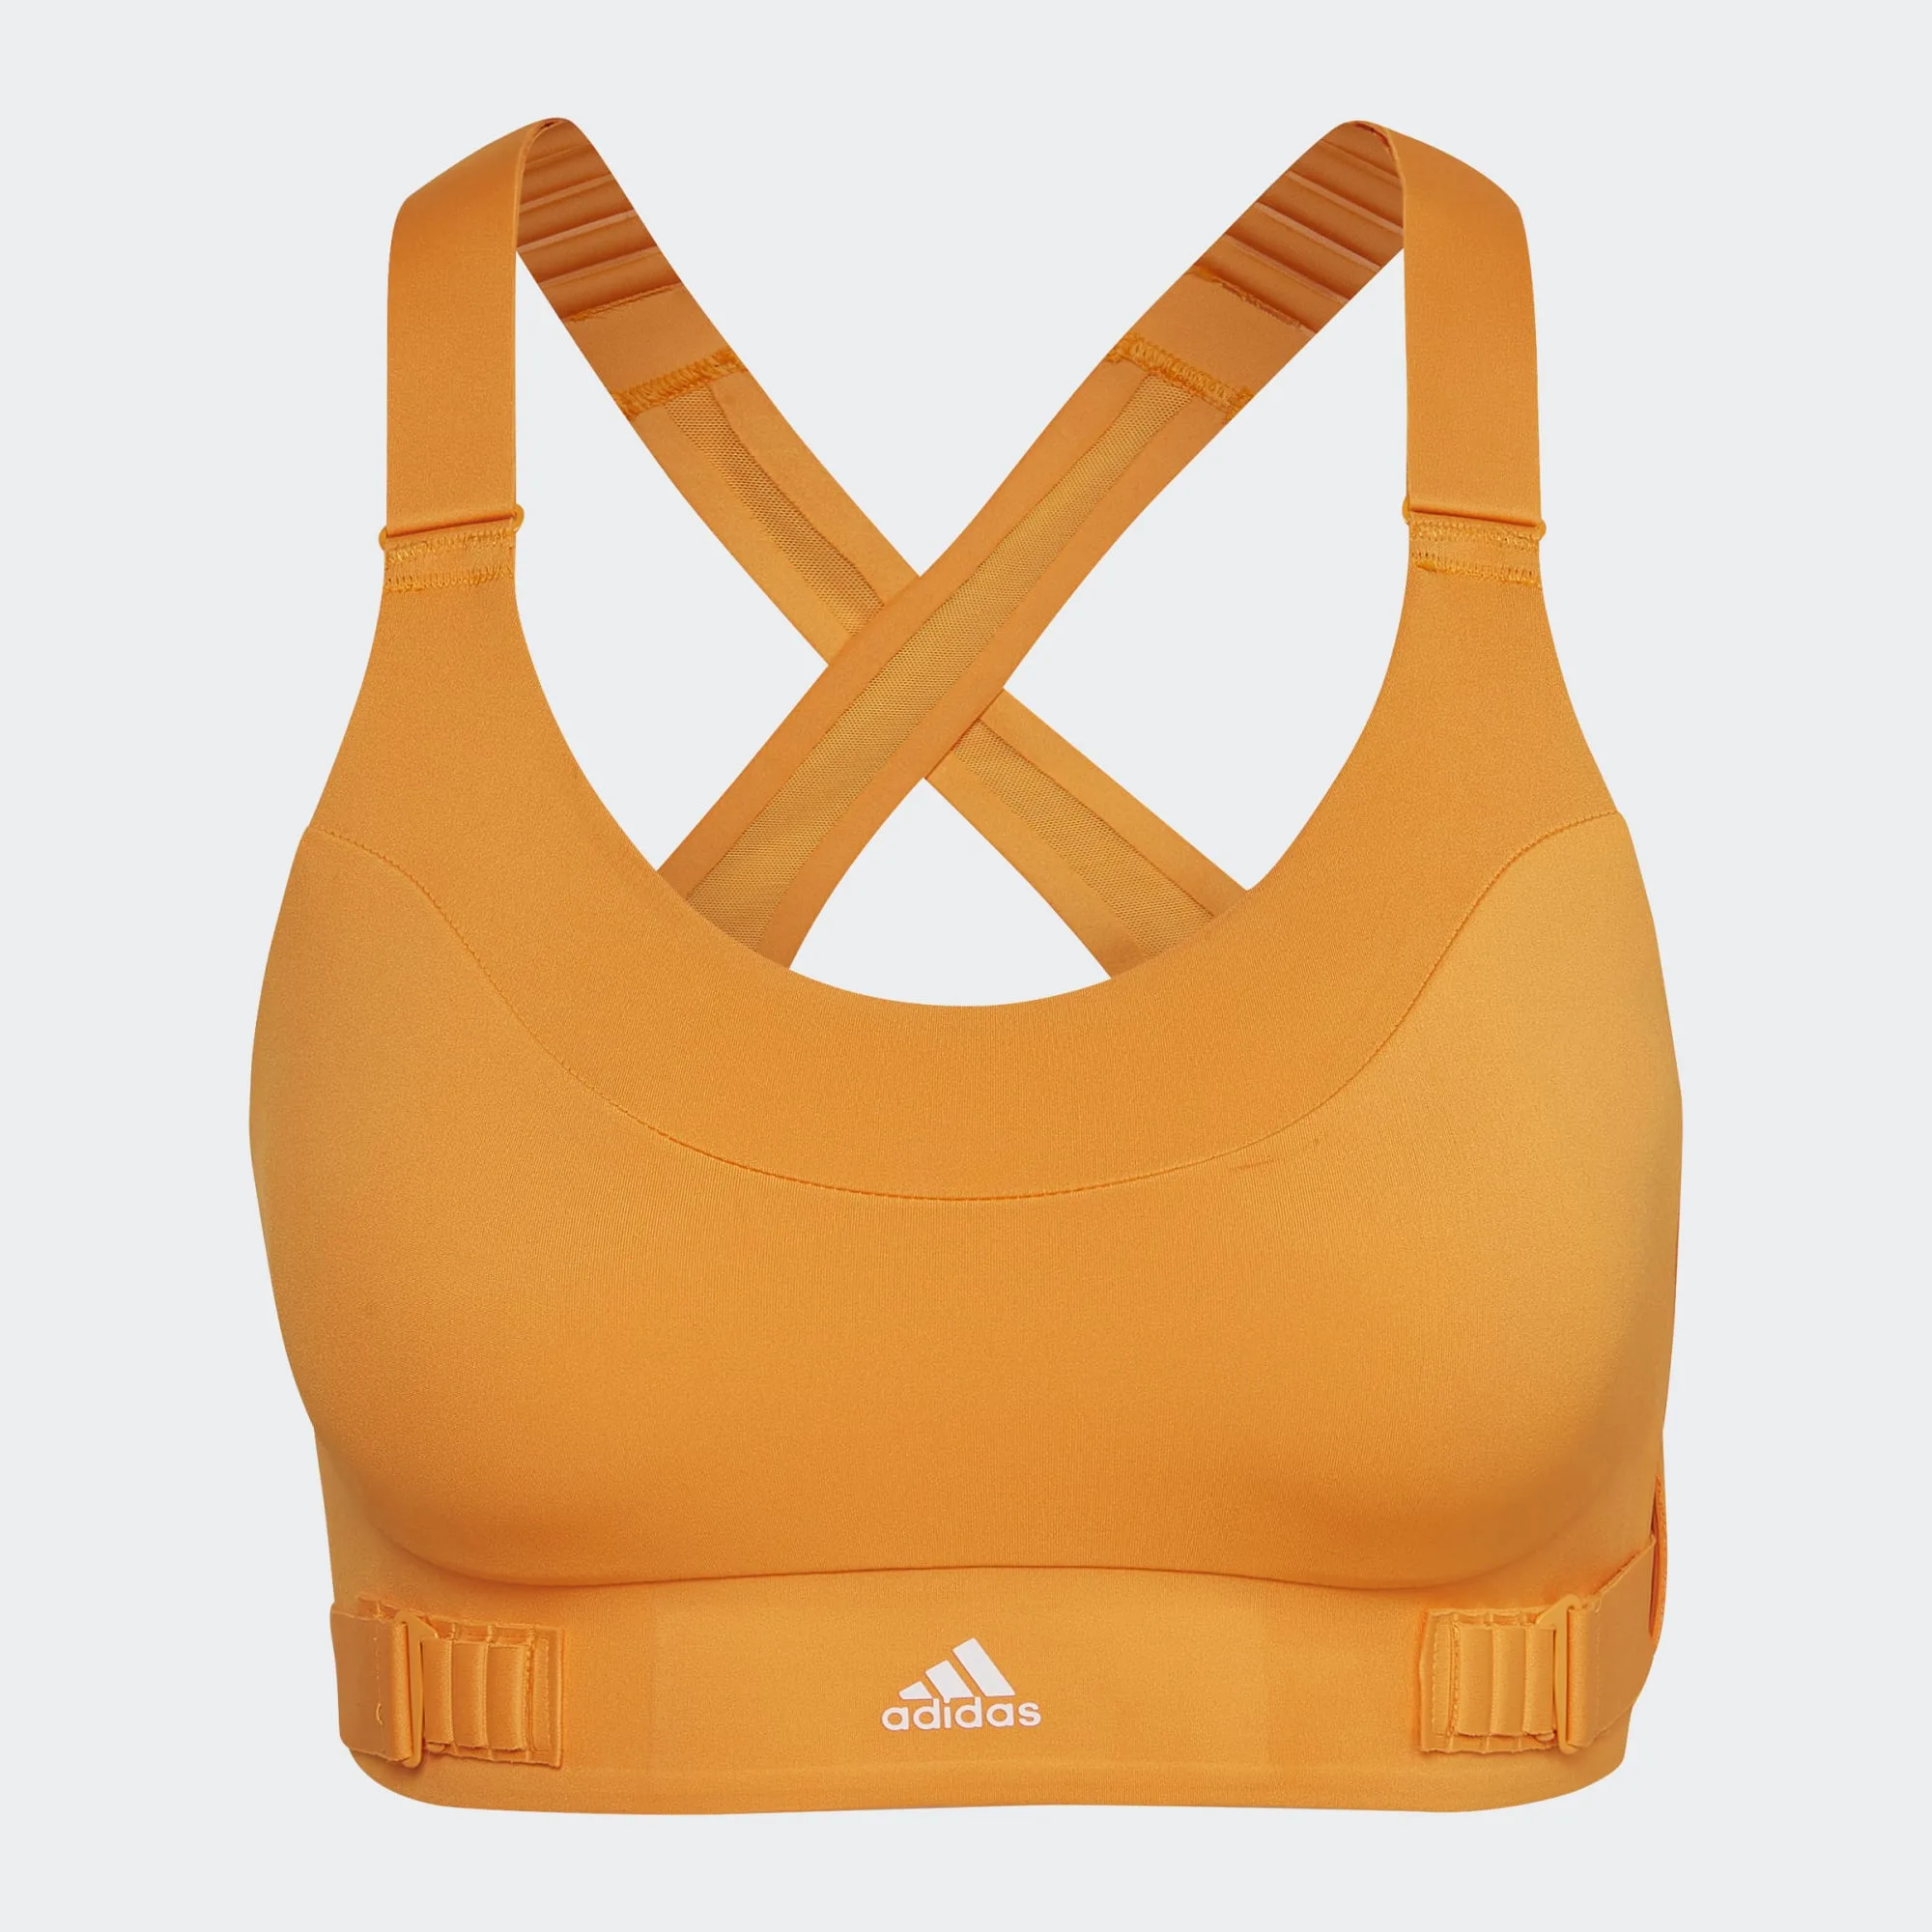 sports bra review-adidas-fastimpact luxe run high support bra-orange